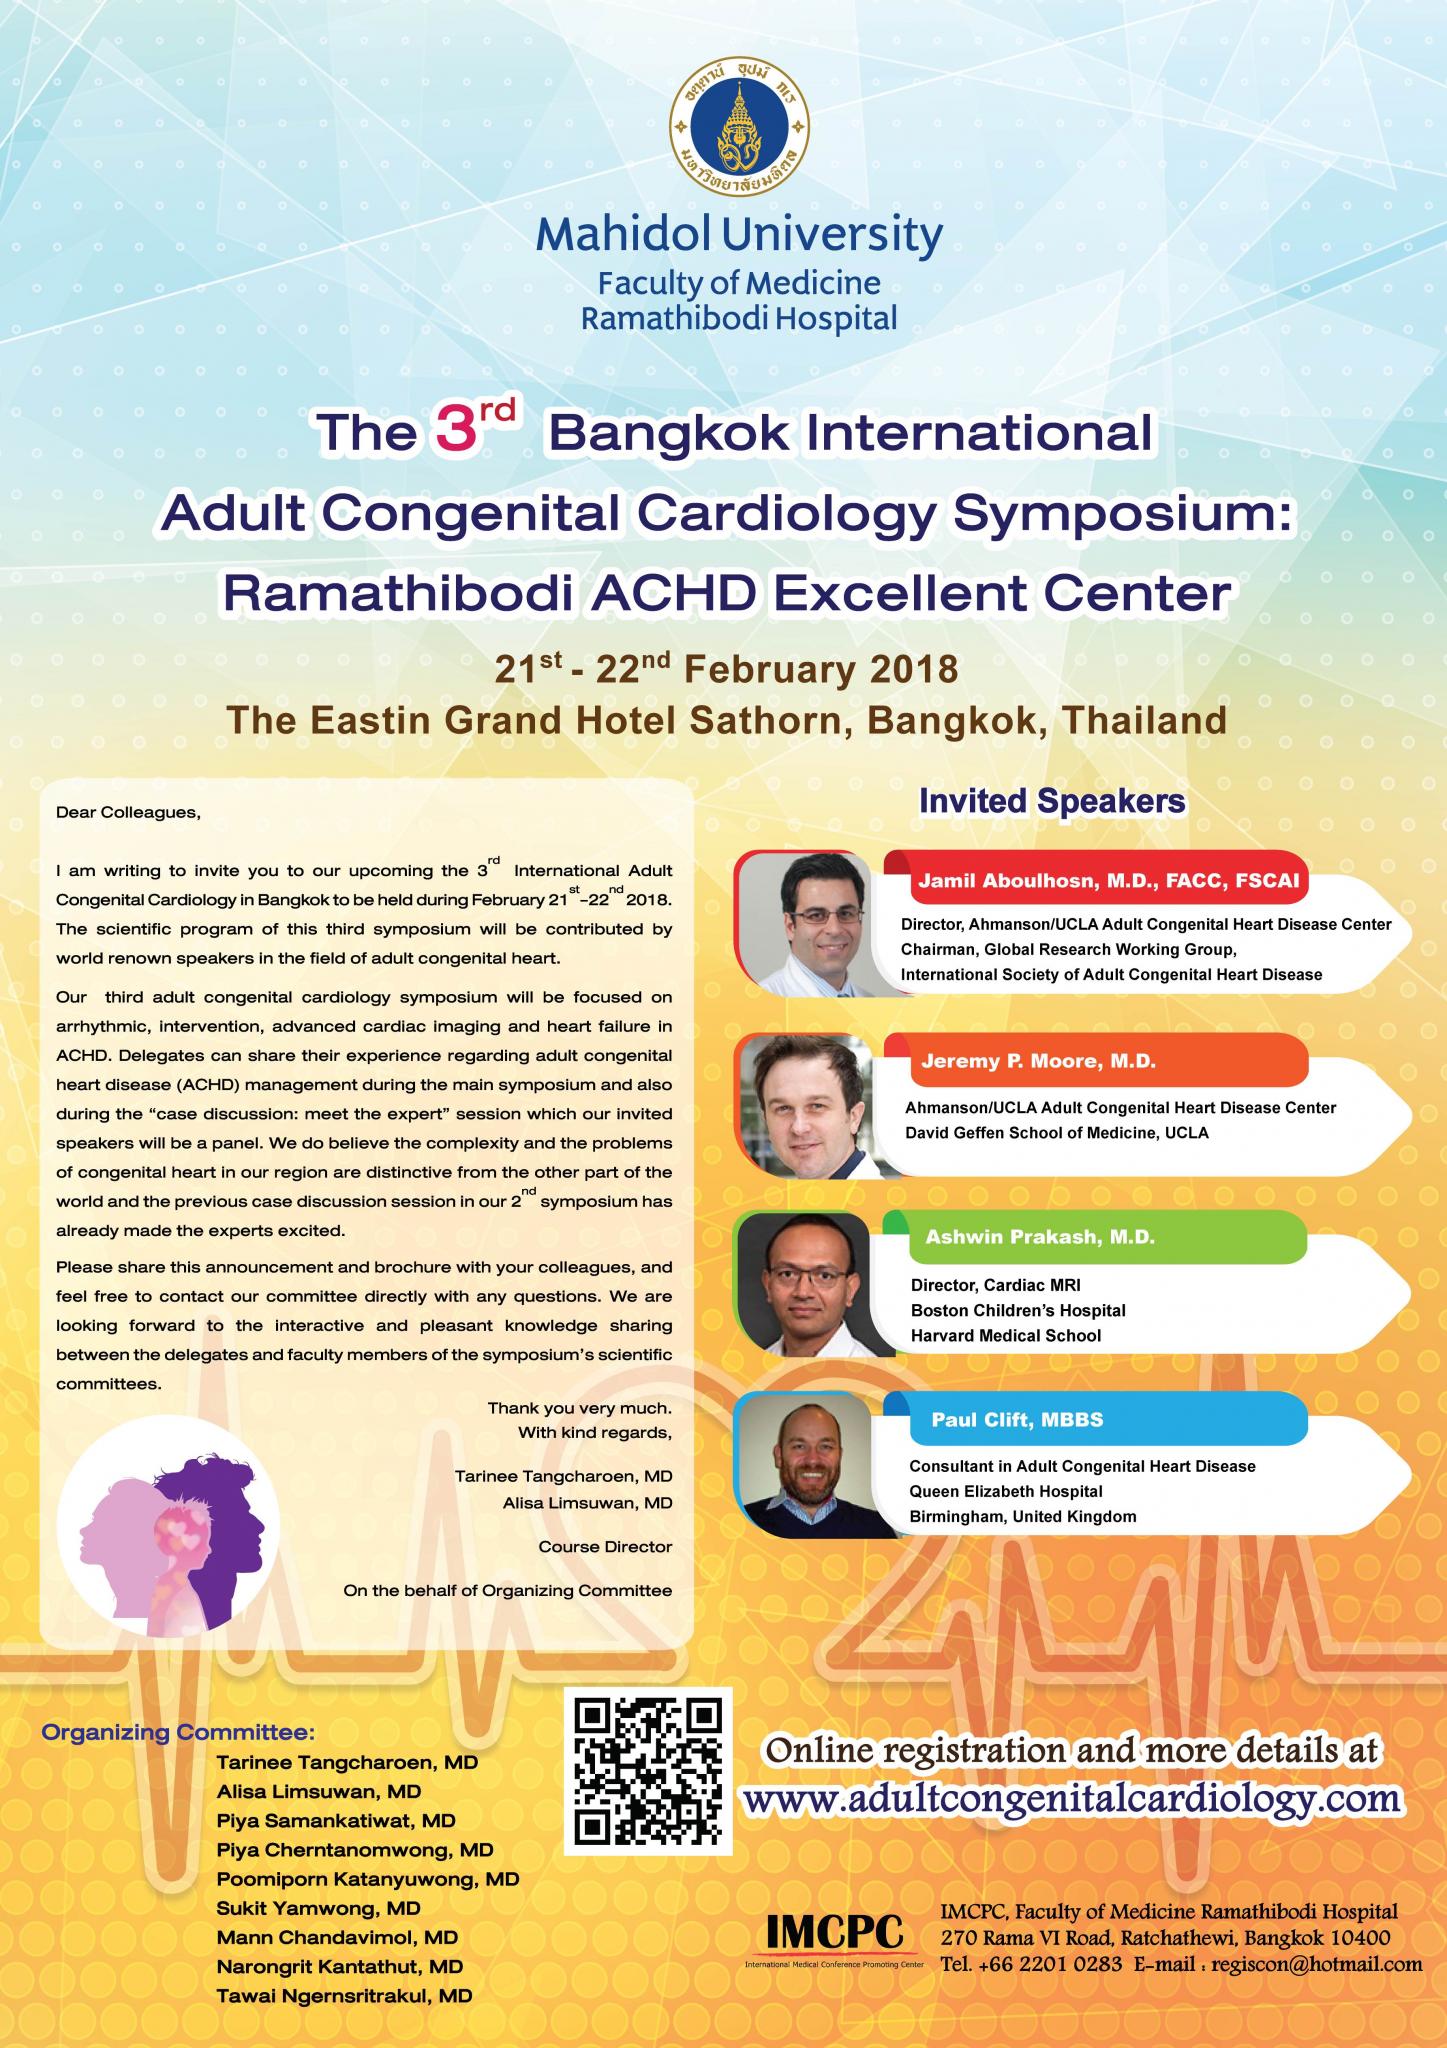 The 3rd Bangkok International Adult Congenital Cardiology Symposium: Ramathibodi ACHD Excellent Center